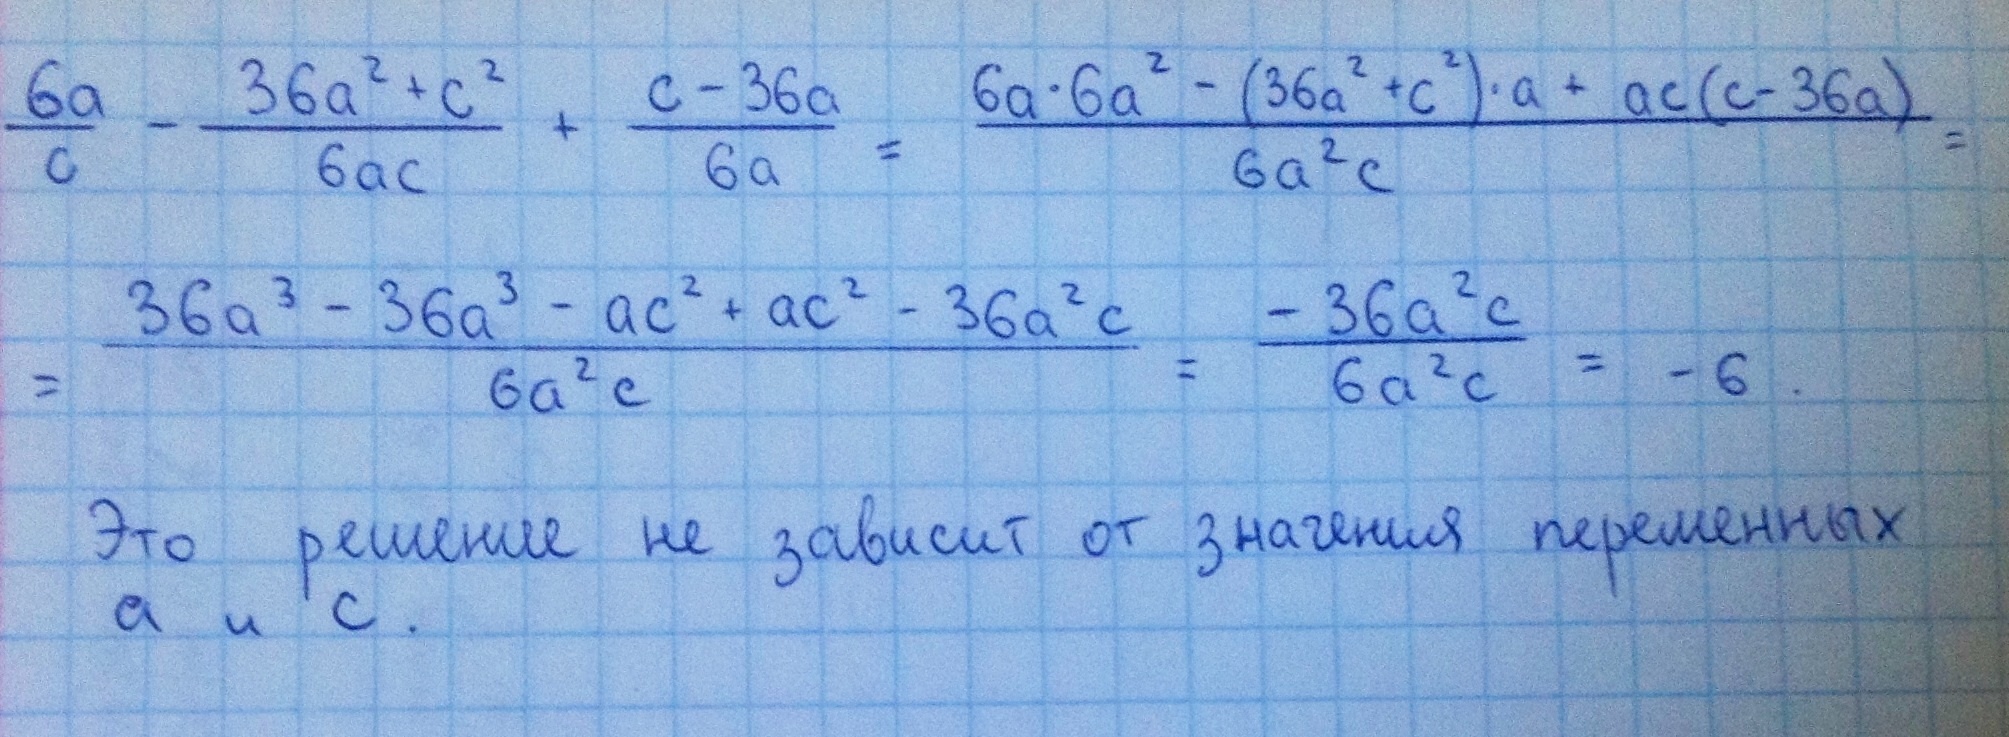 38 6 в c. 7a/6c-49a 2+36c. 6a/c-36a2+c2/6ac+c-36a/6a. 42/7а-а2-6/а при а 2. 36a^2+c^2.